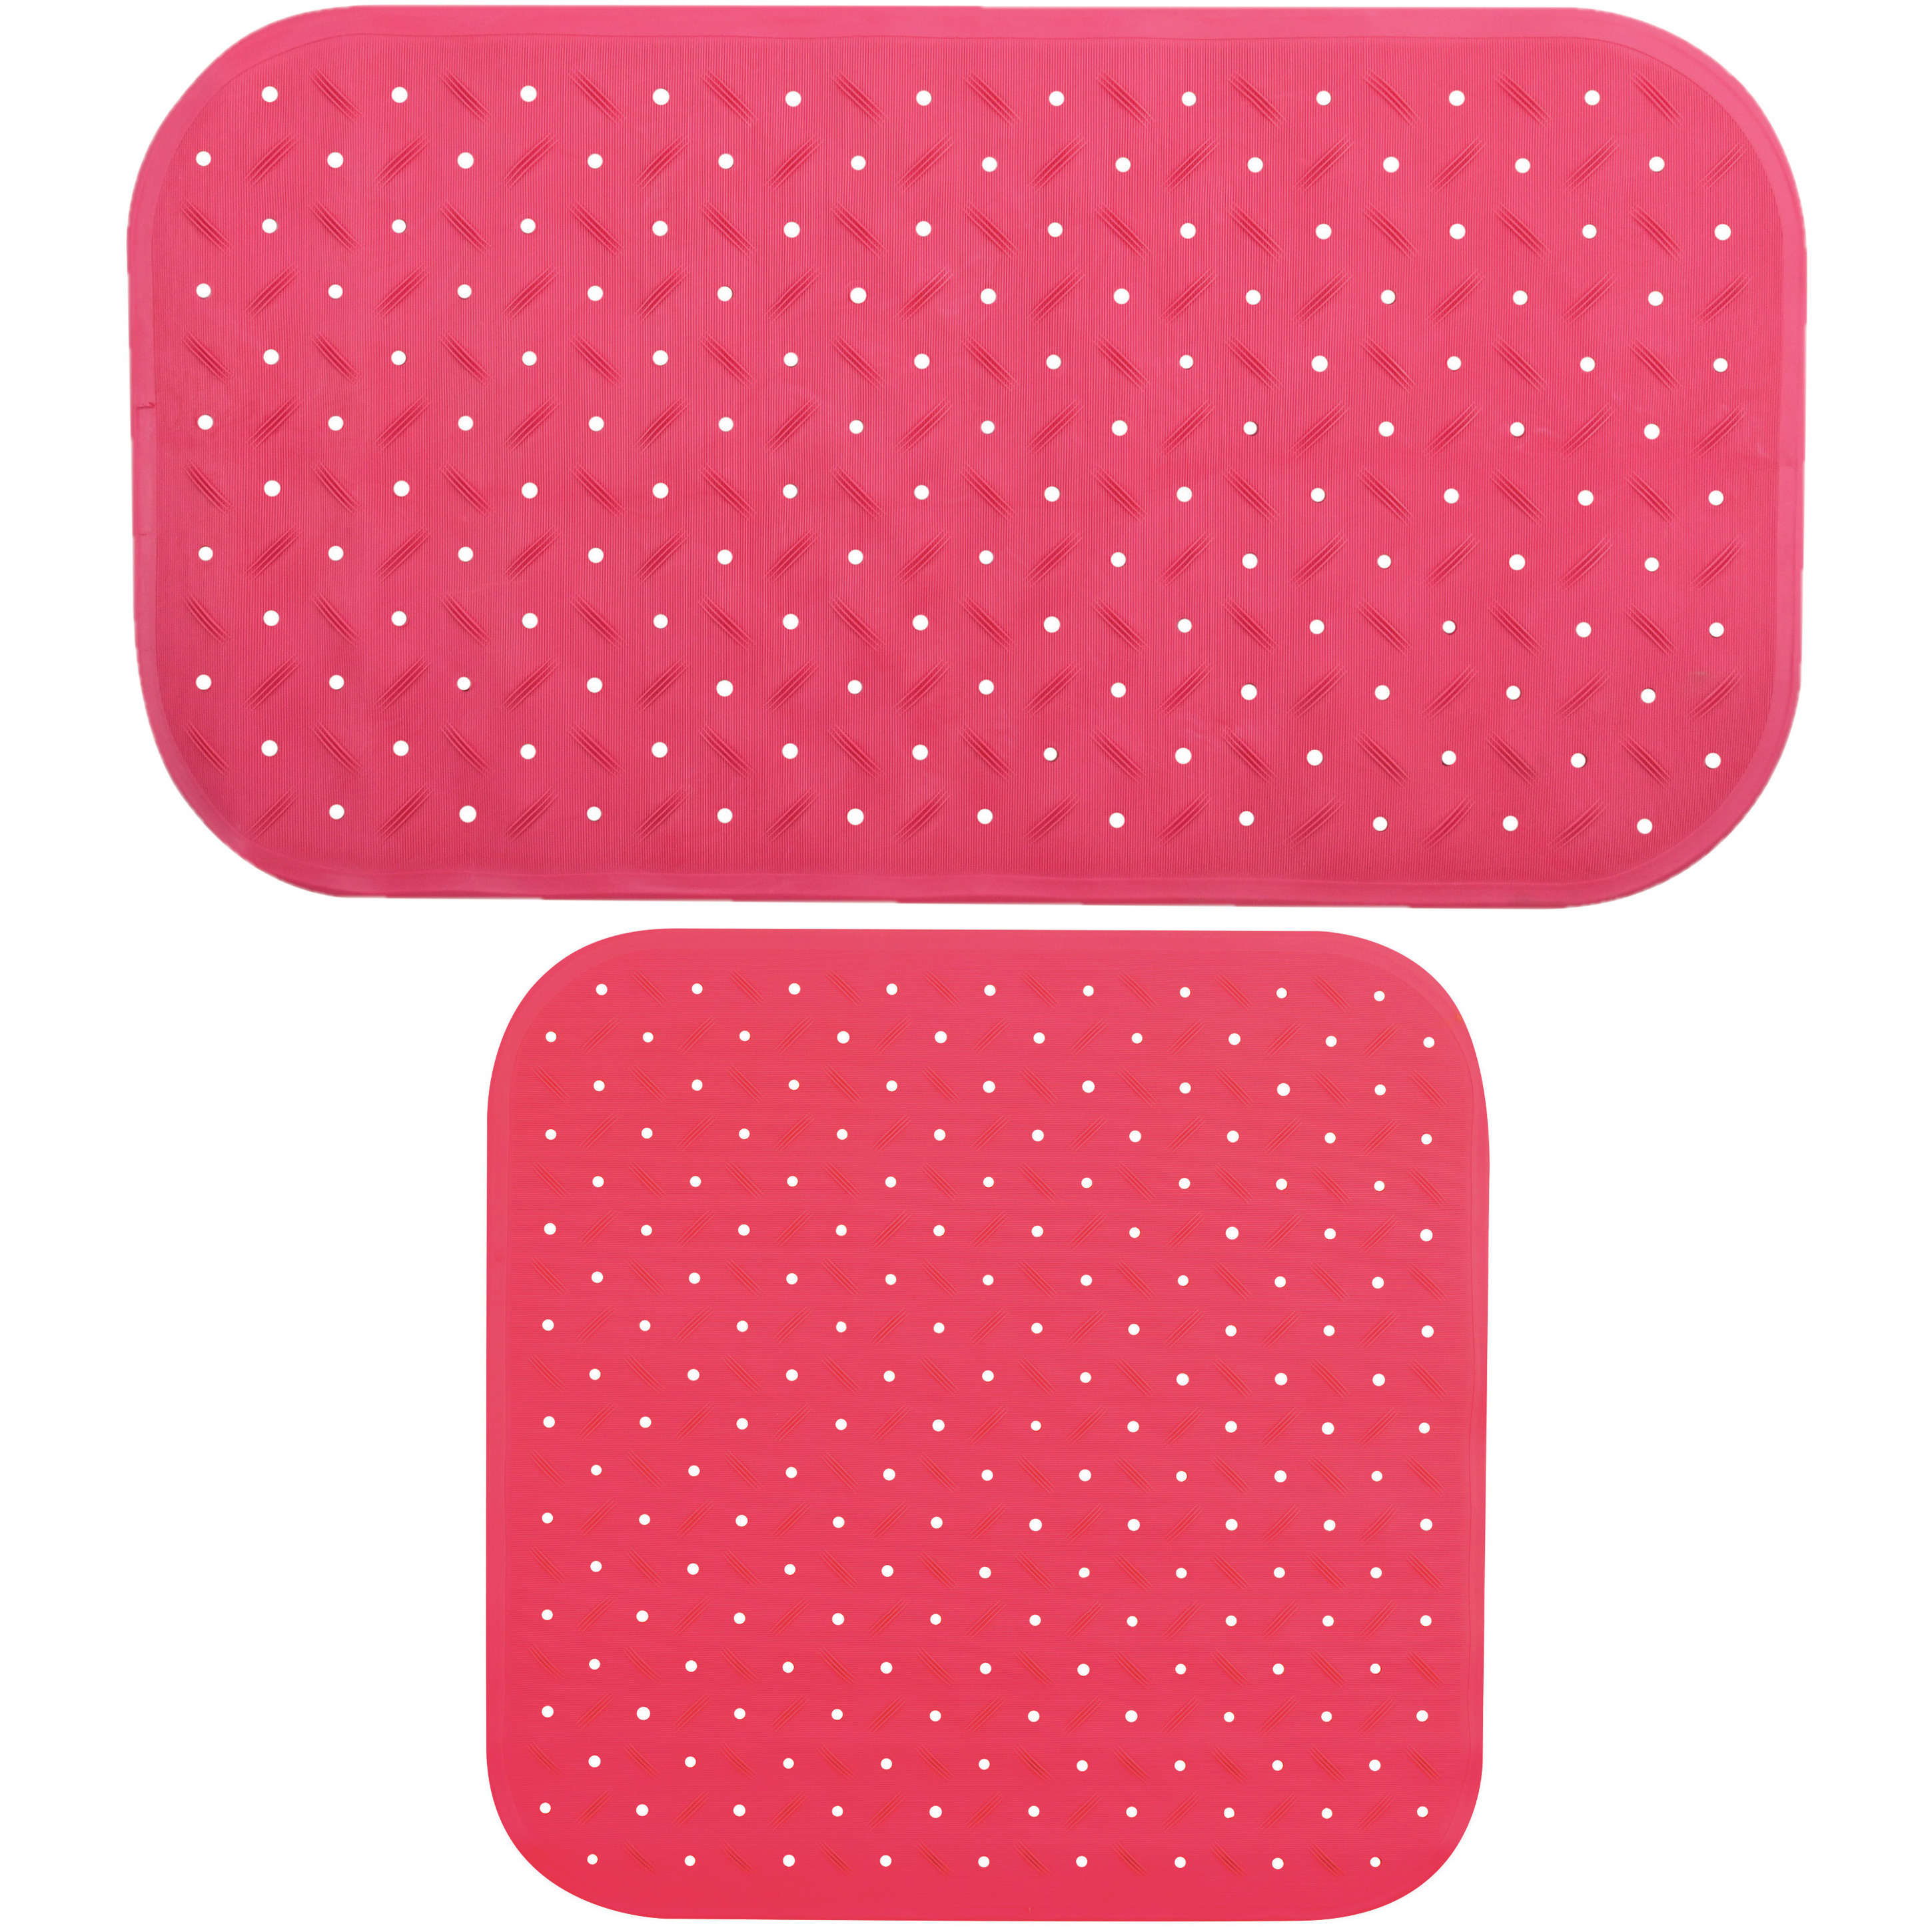 MSV Douche-bad anti-slip matten set badkamer rubber 2x stuks fuchsia roze 2 formaten